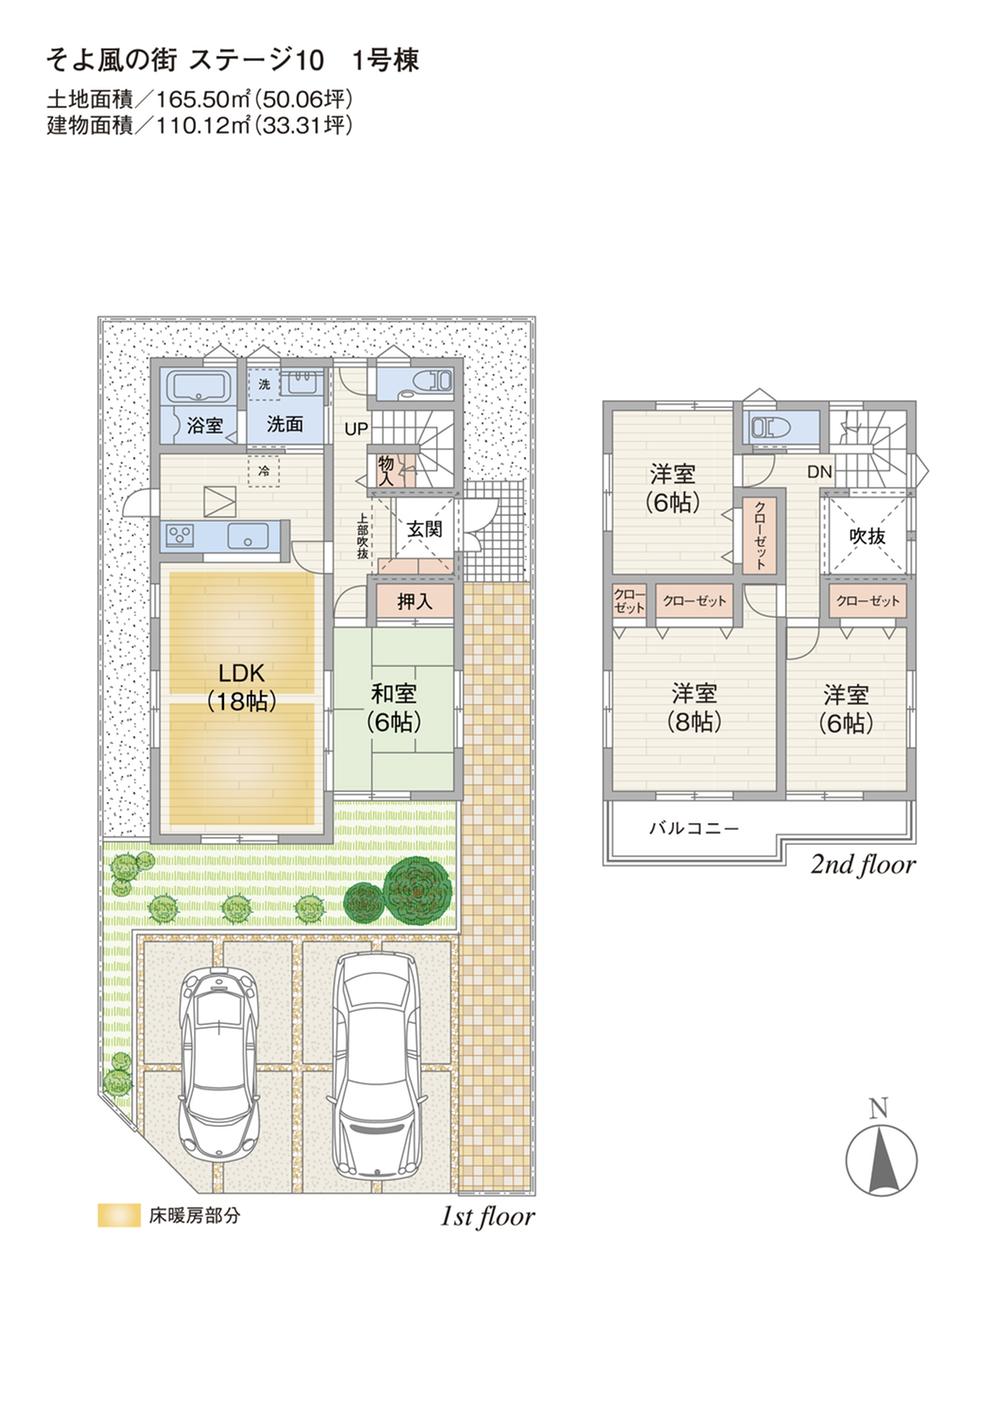 Floor plan. (1 Building), Price 22,800,000 yen, 4LDK, Land area 165.5 sq m , Building area 110.12 sq m